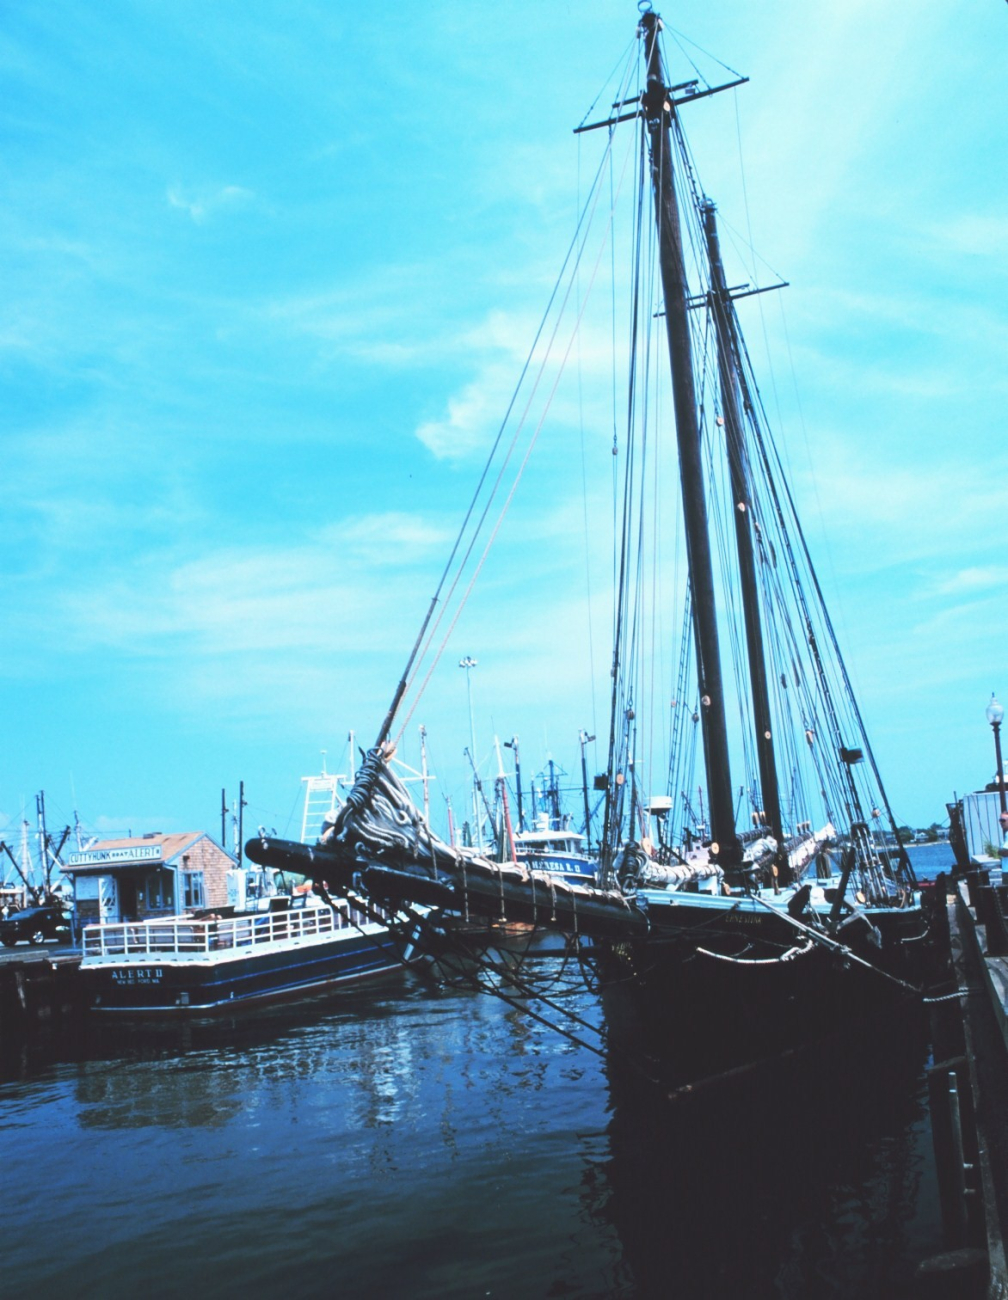 The old fishing schooner ERNESTINA at New Bedford Harbor